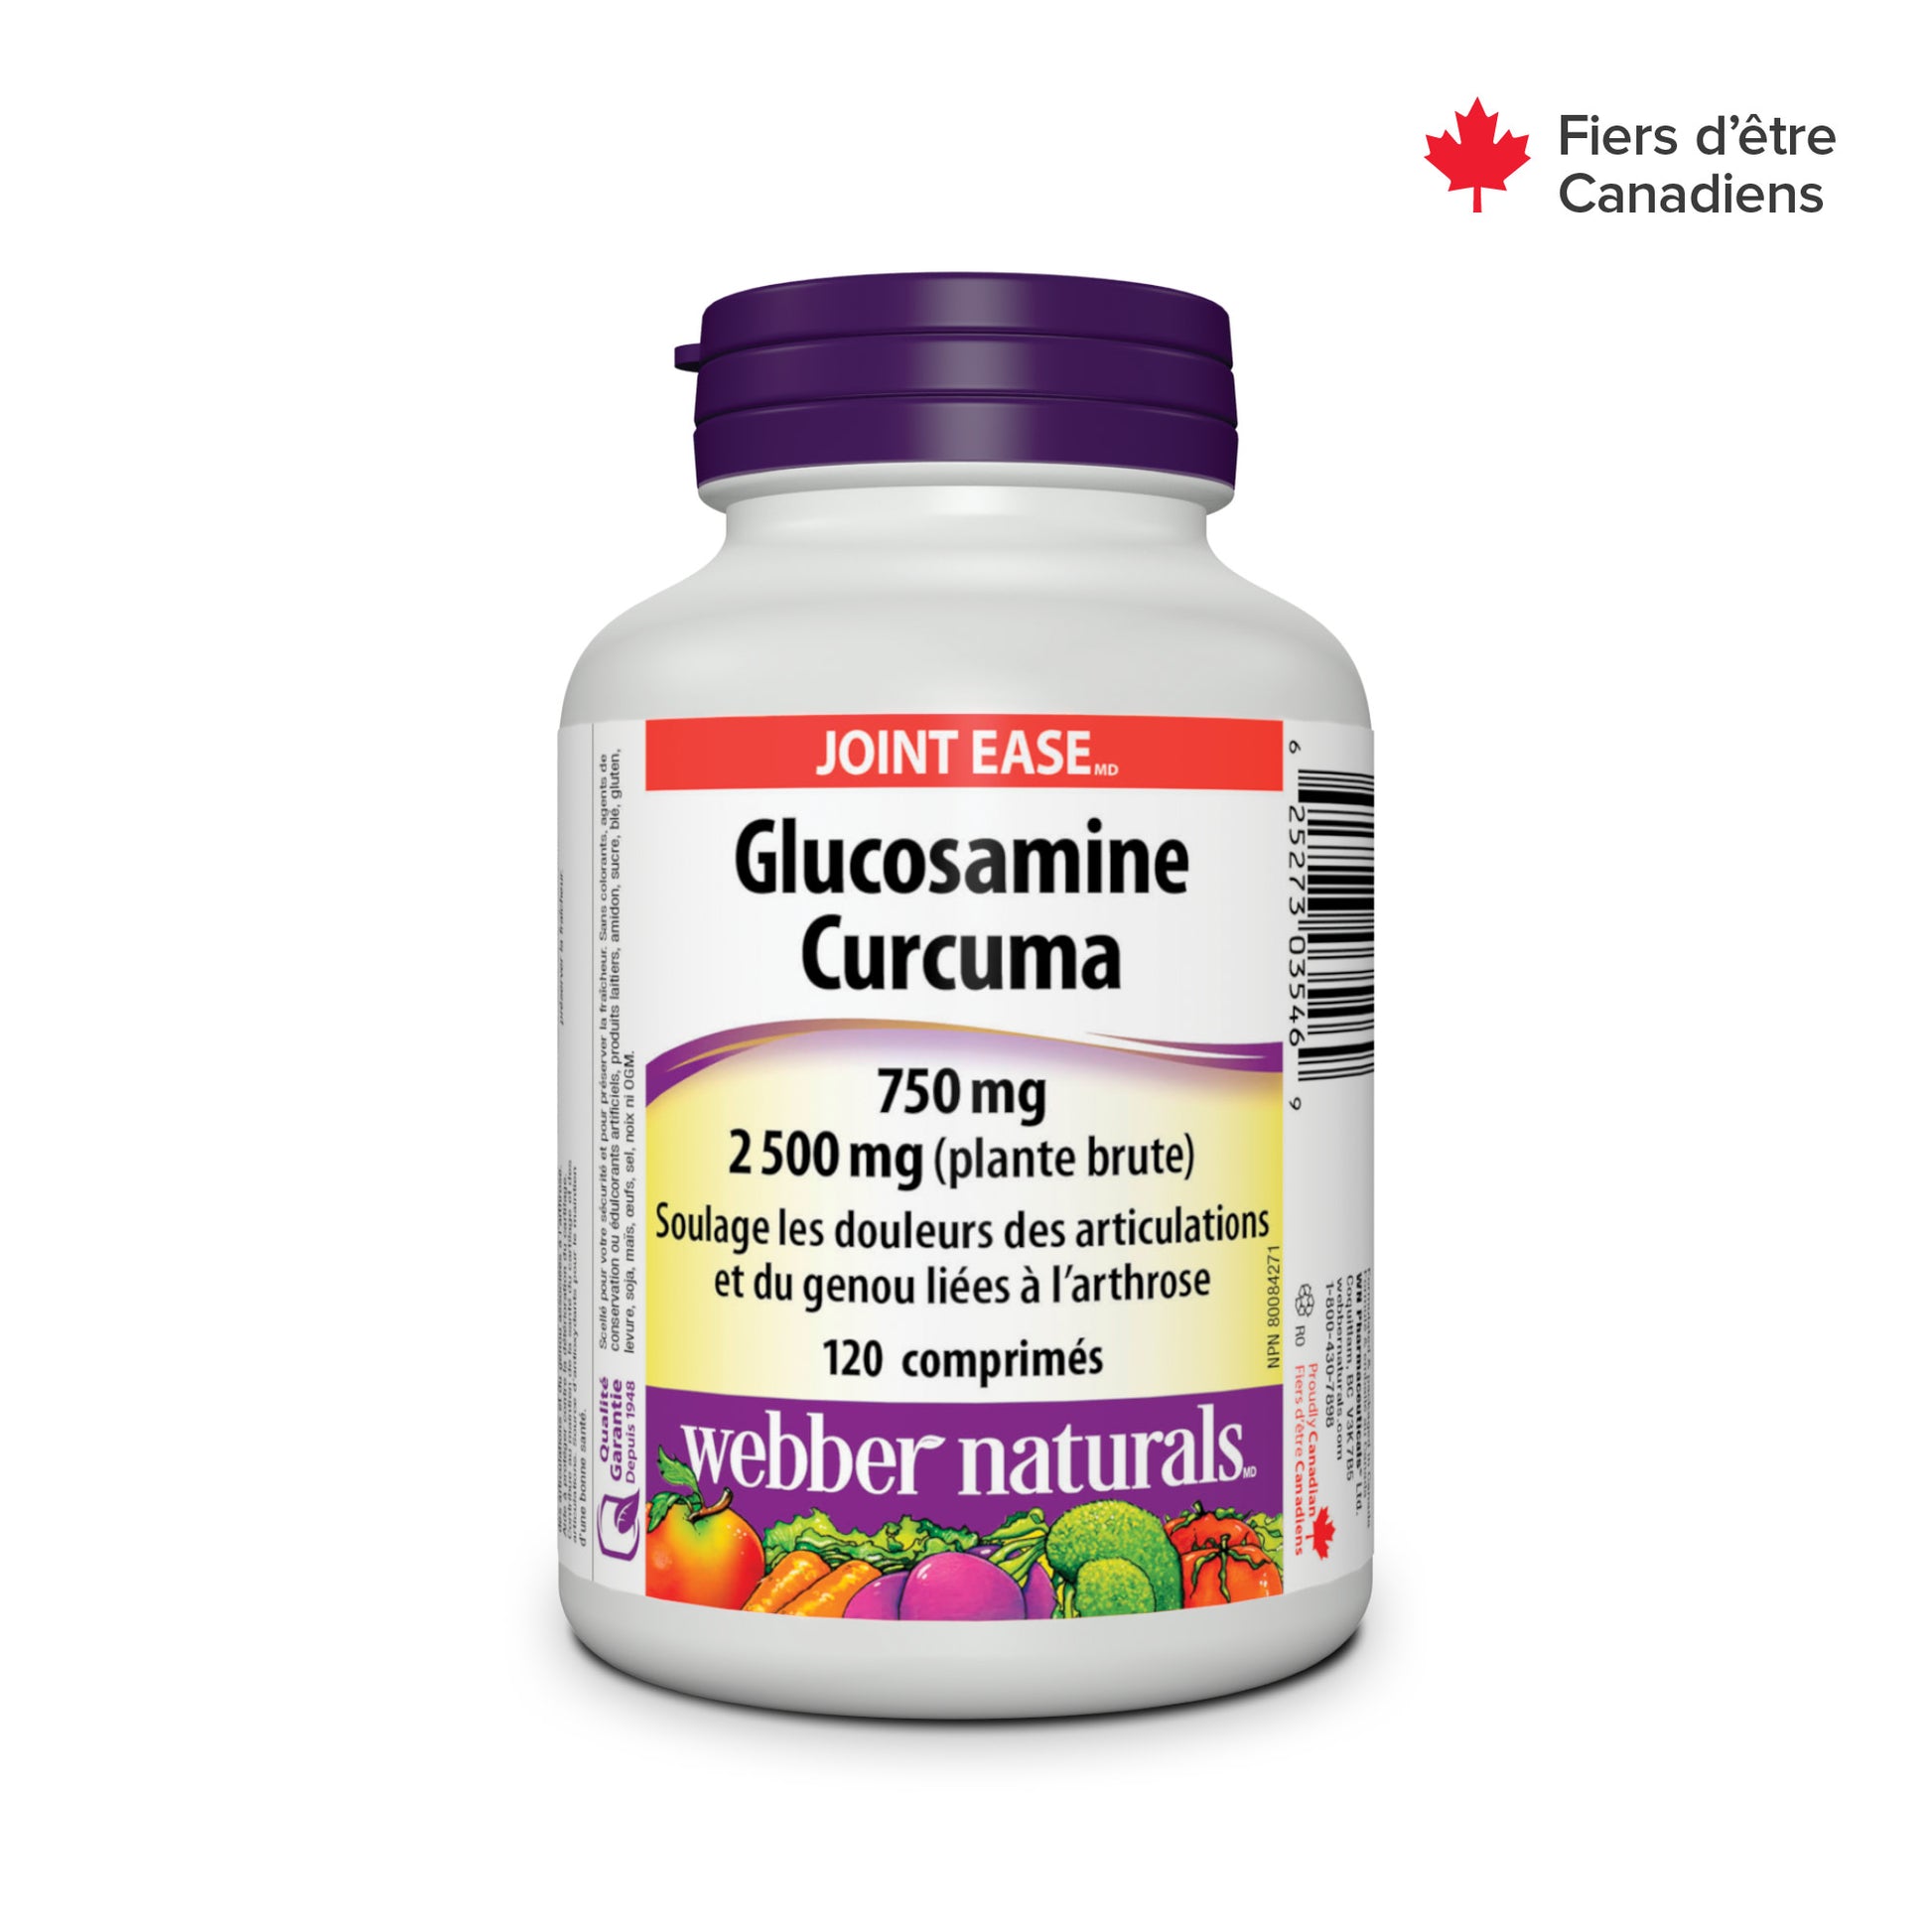 Glucosamine Curcuma 750 mg / 2 500 mg (plante brute) for Webber Naturals|v|hi-res|WN3546